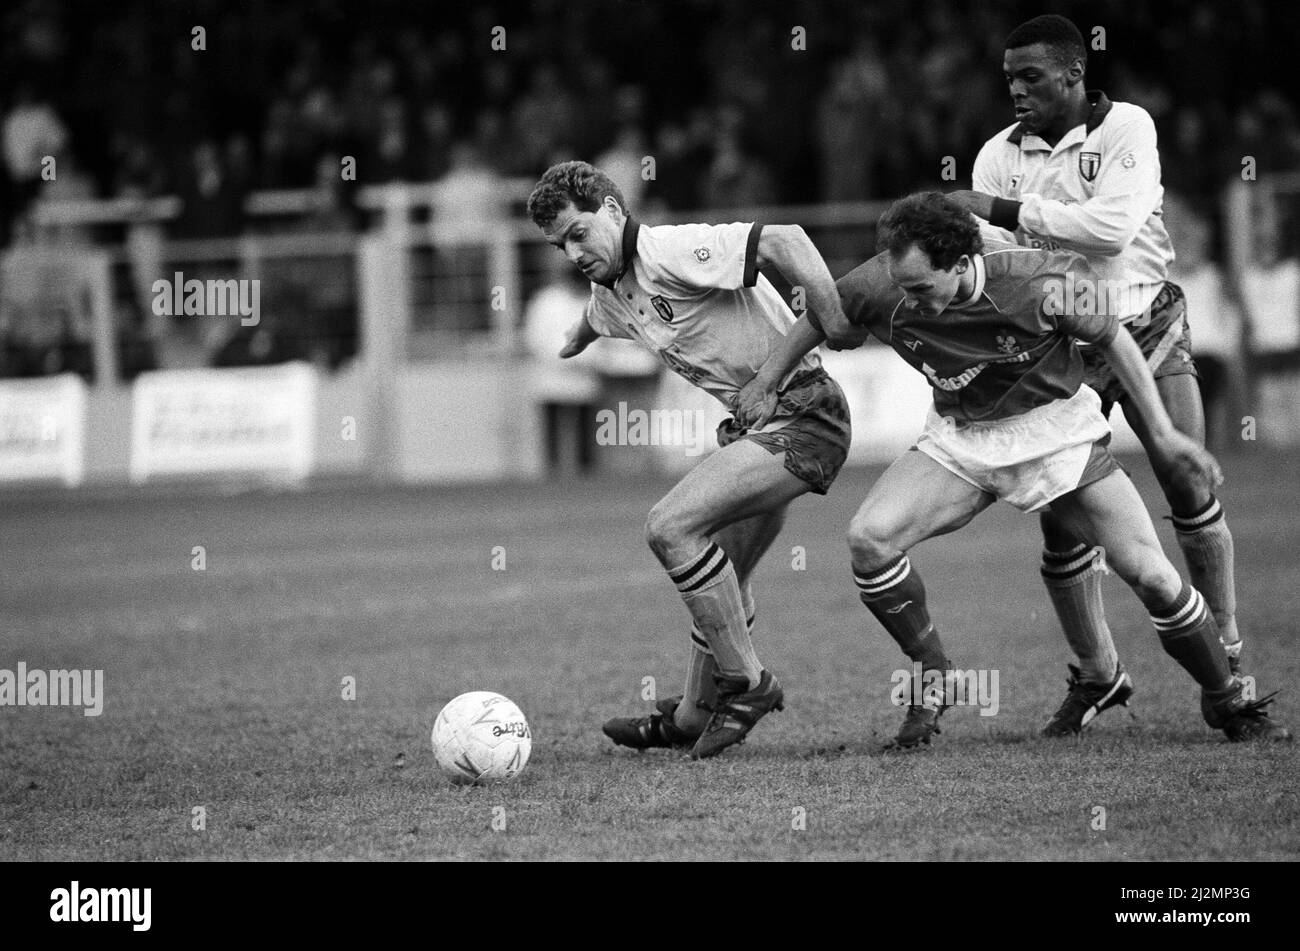 Reading v Bury, final score 1-0 to Reading. League Division Three. Elm Park. 20th April 1991. Stock Photo